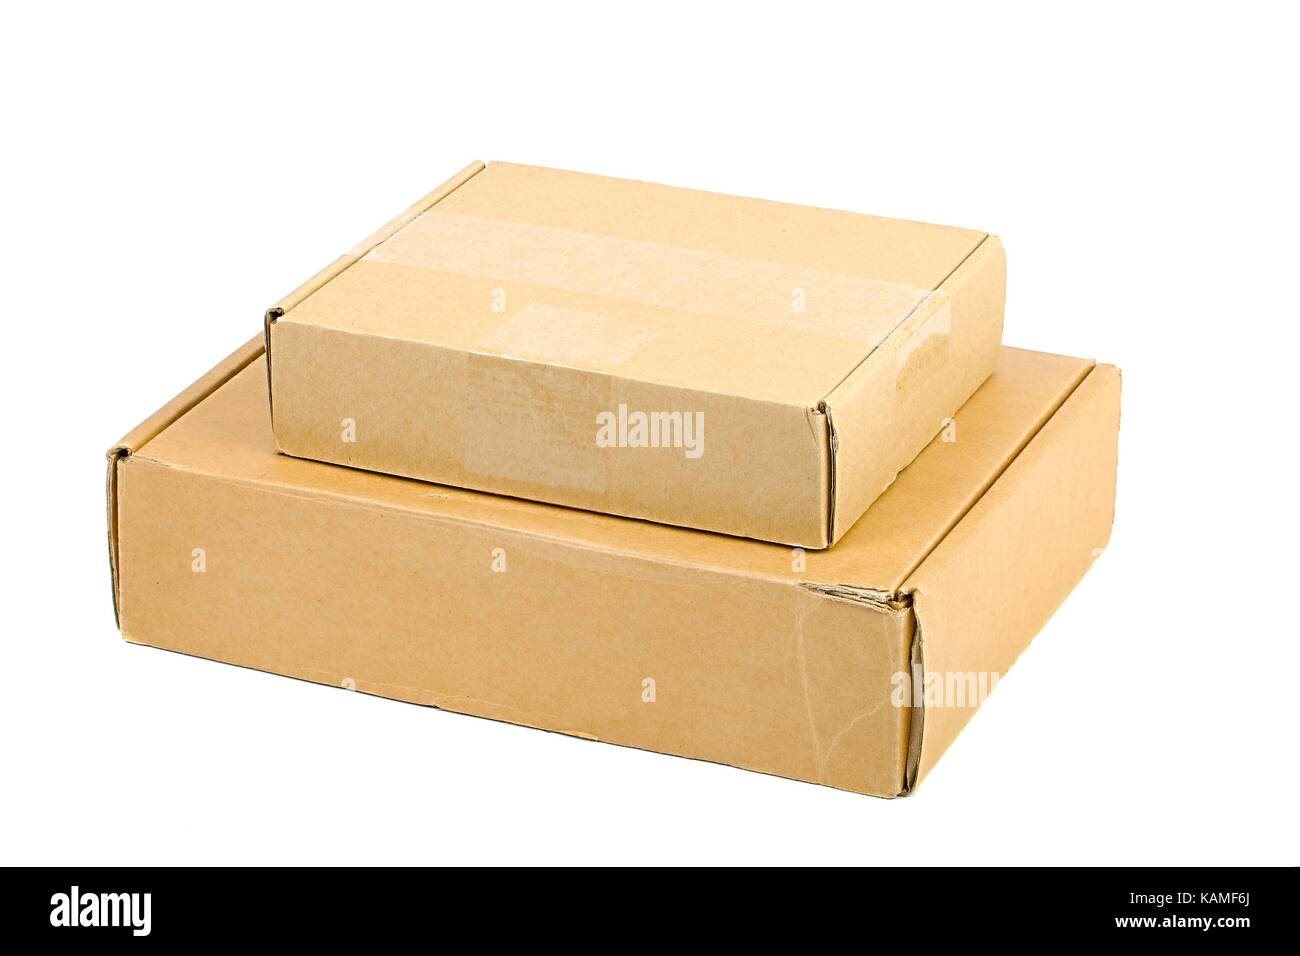 Cardboard Boxes on White Stock Photo